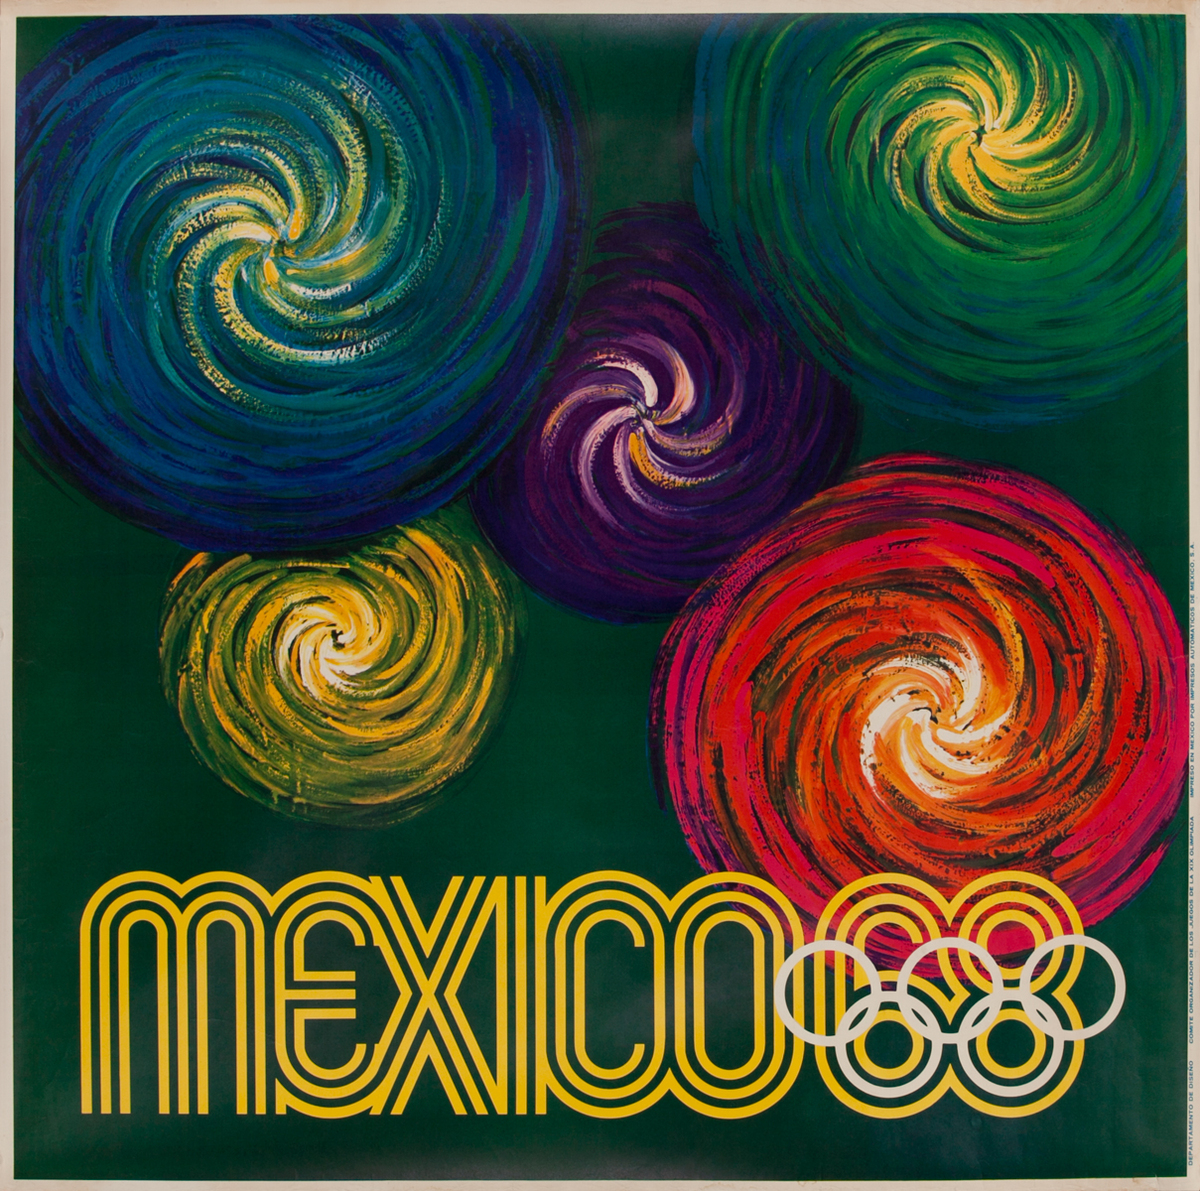 Original 1968 Mexico City Olympics Poster green backround